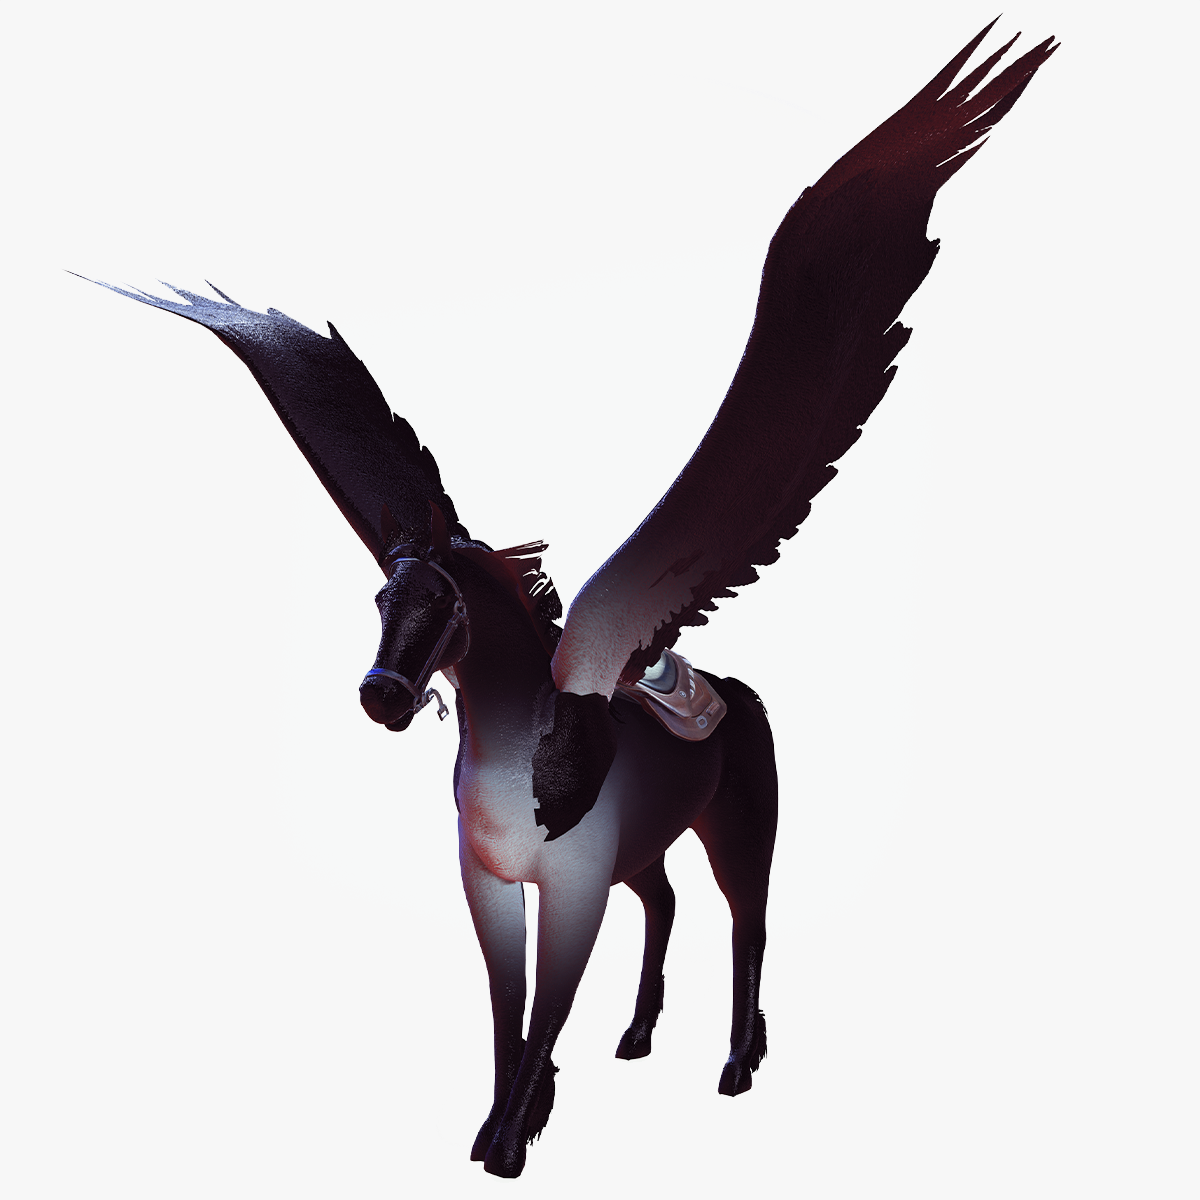 Free STL file keyring/ key ring Blue Pegasus Emblem (FAIRY TAIL